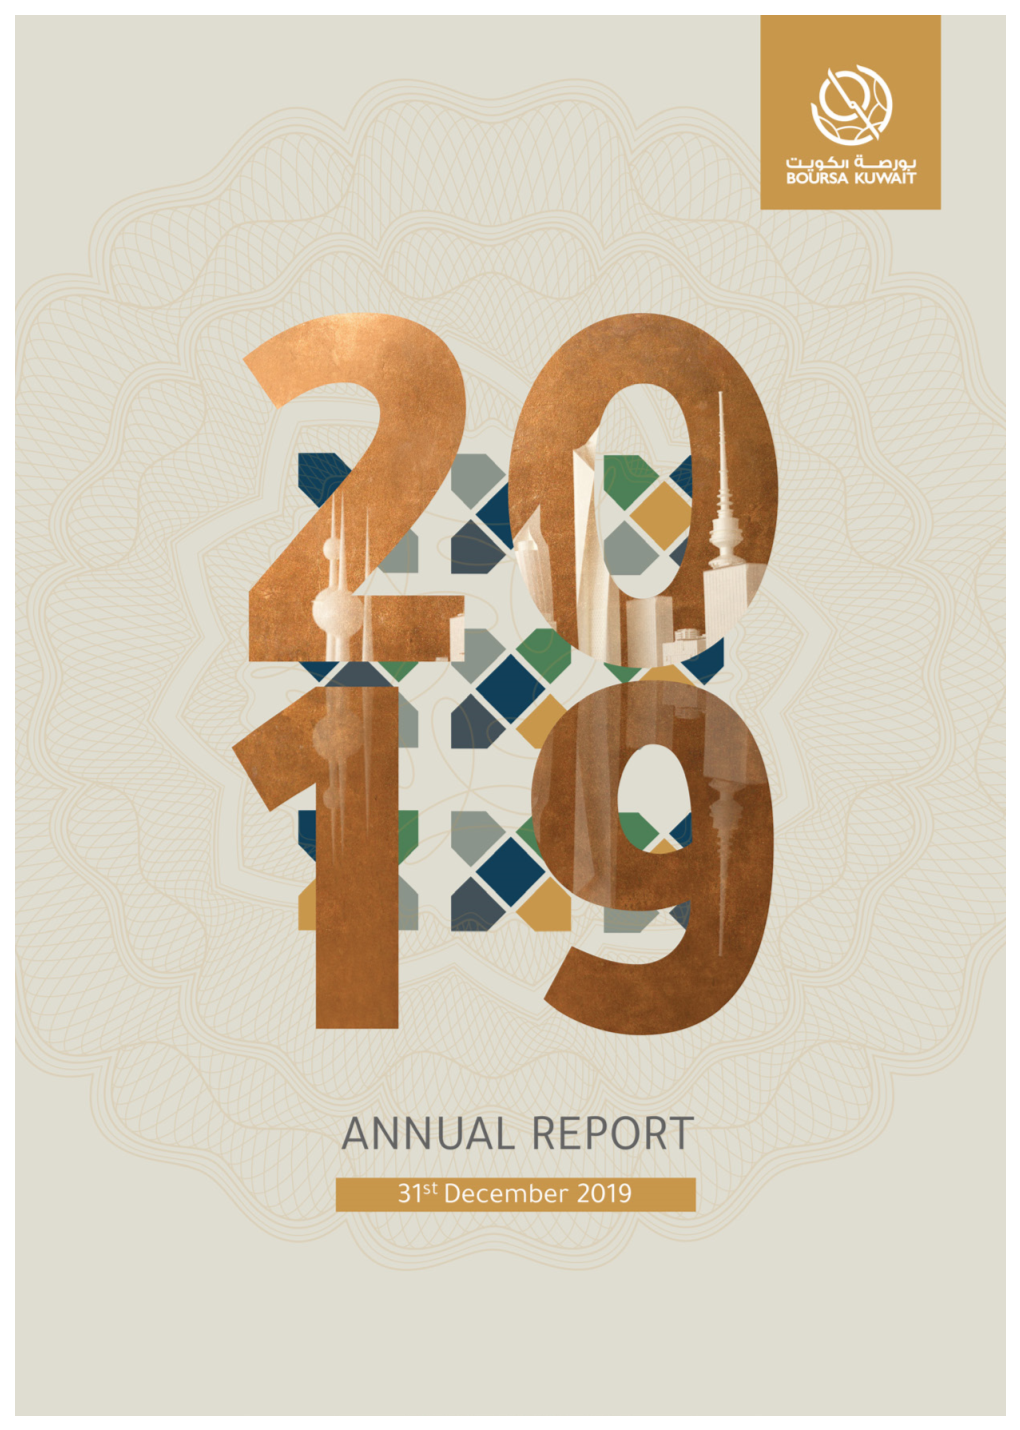 Boursa Kuwait Annual Report